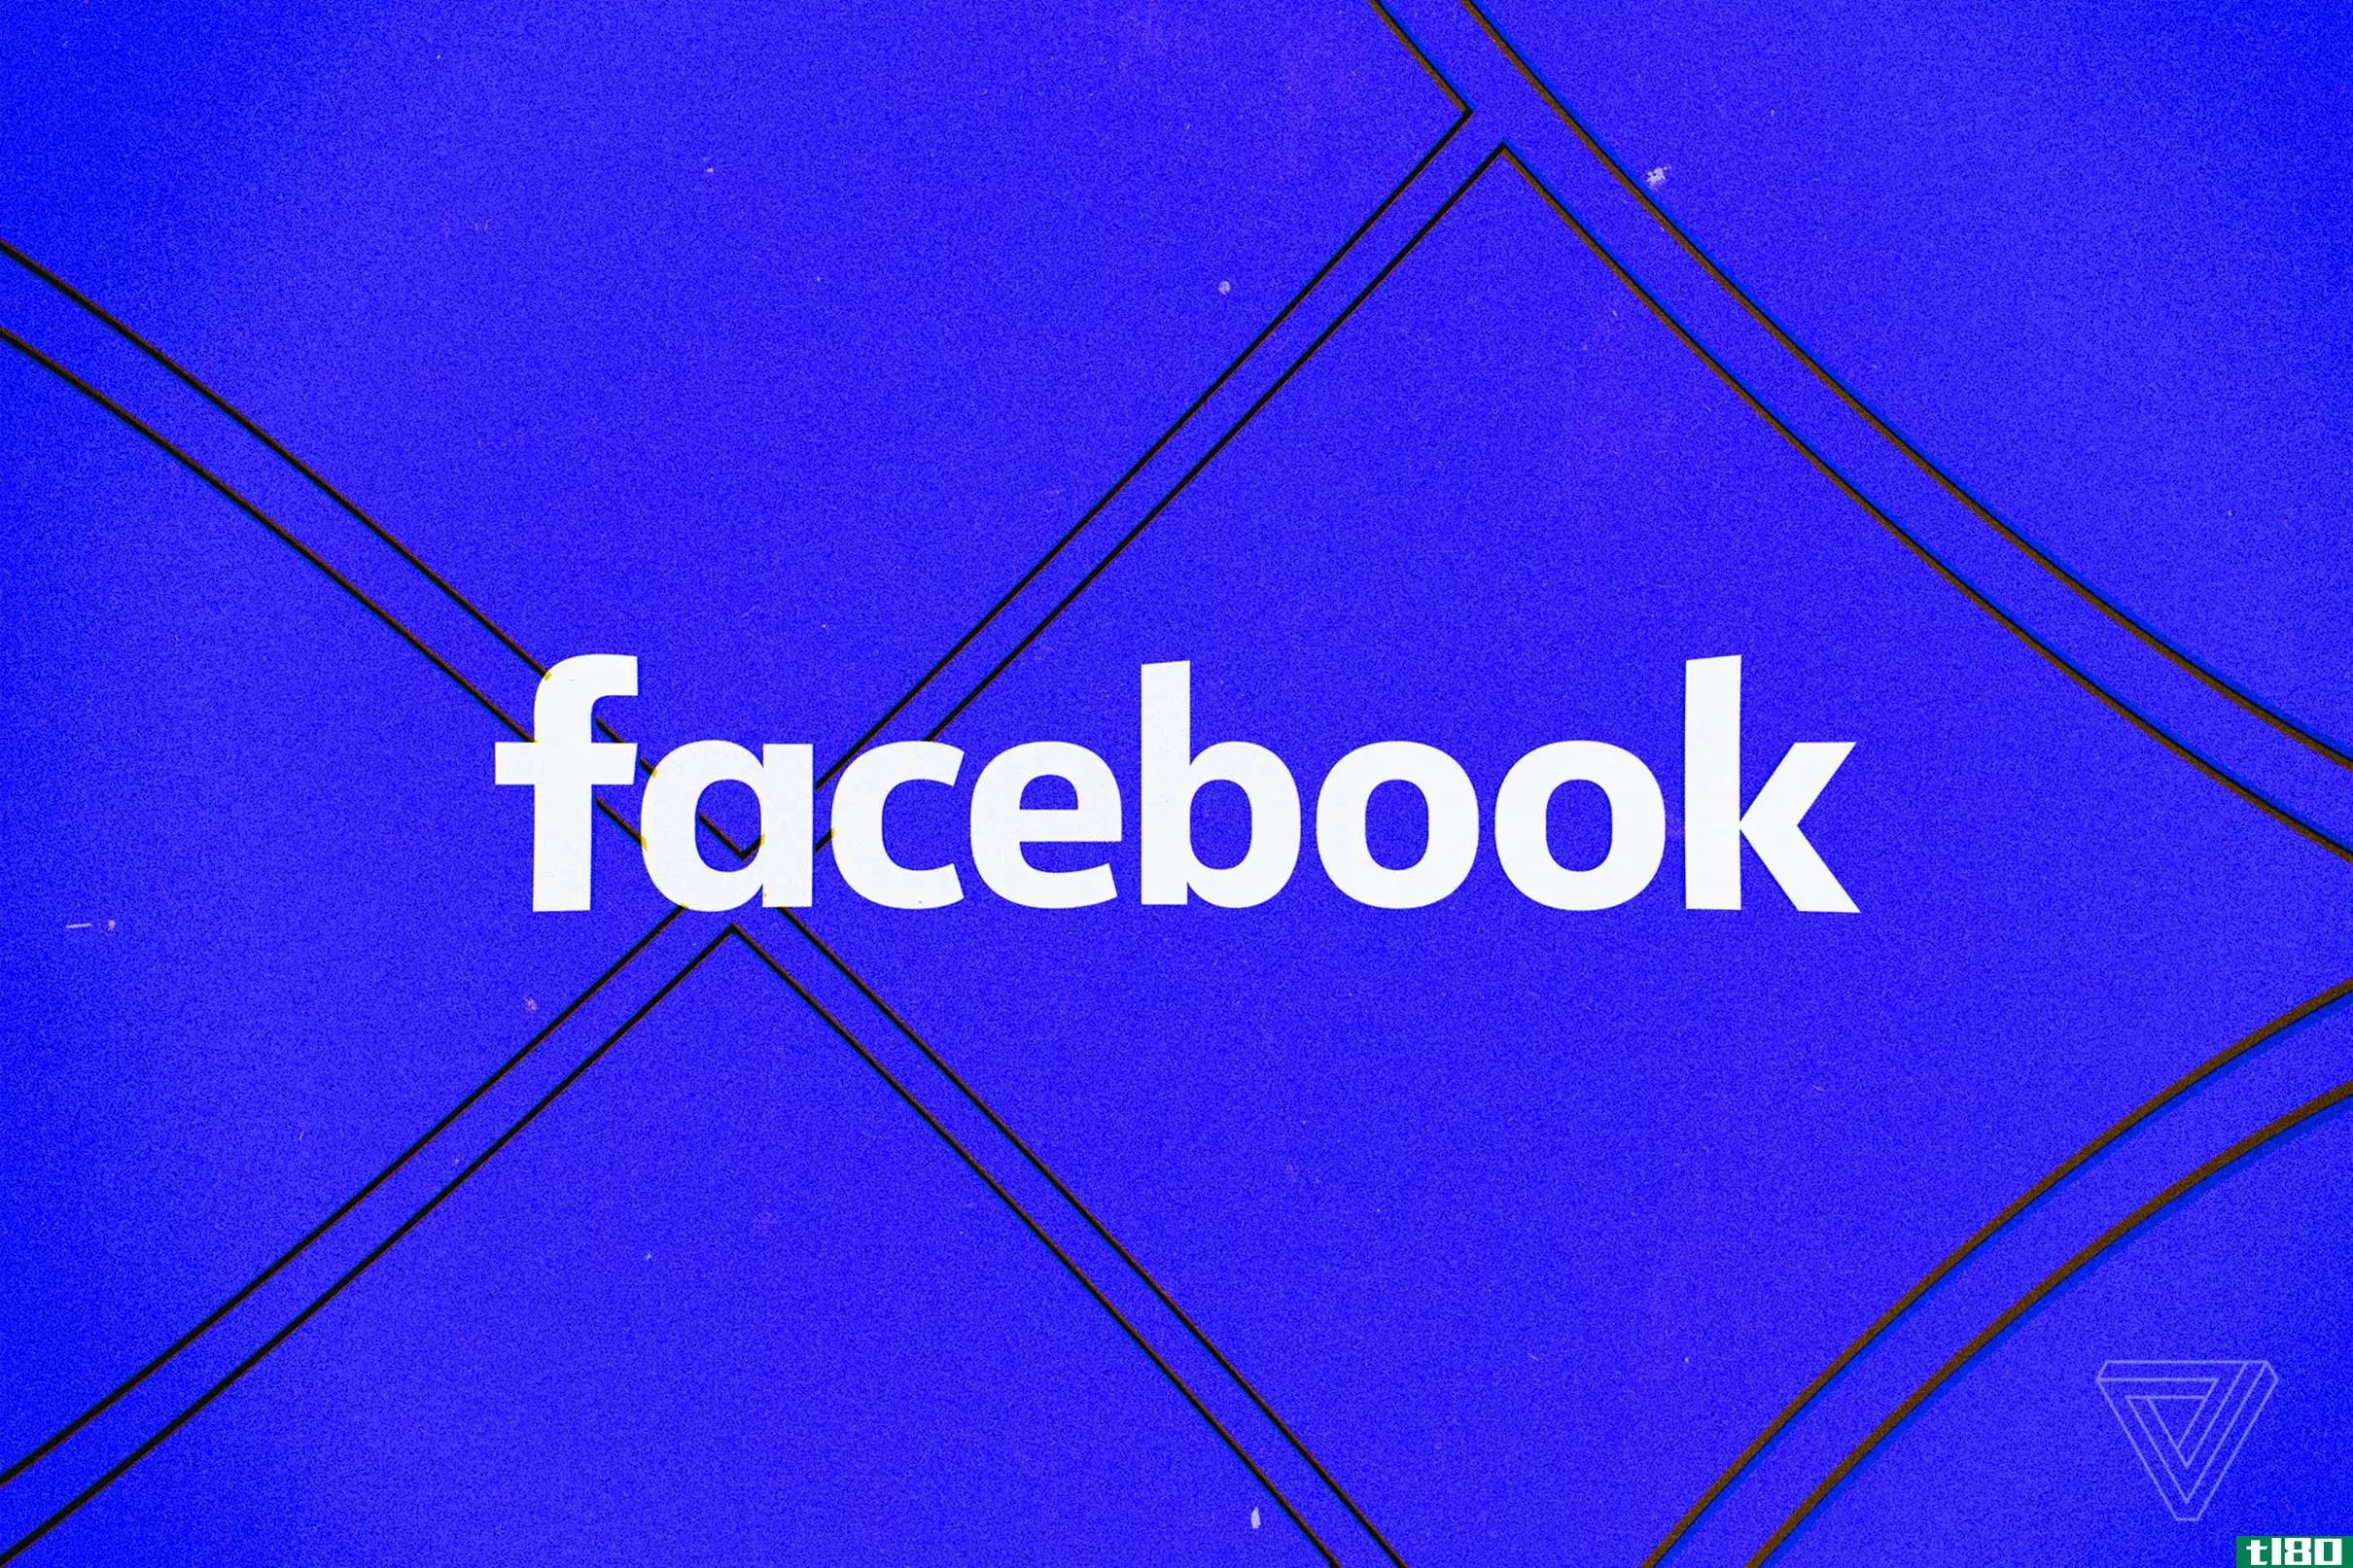 facebook正在测试一种创作者通过故事赚钱的方法：贴纸广告